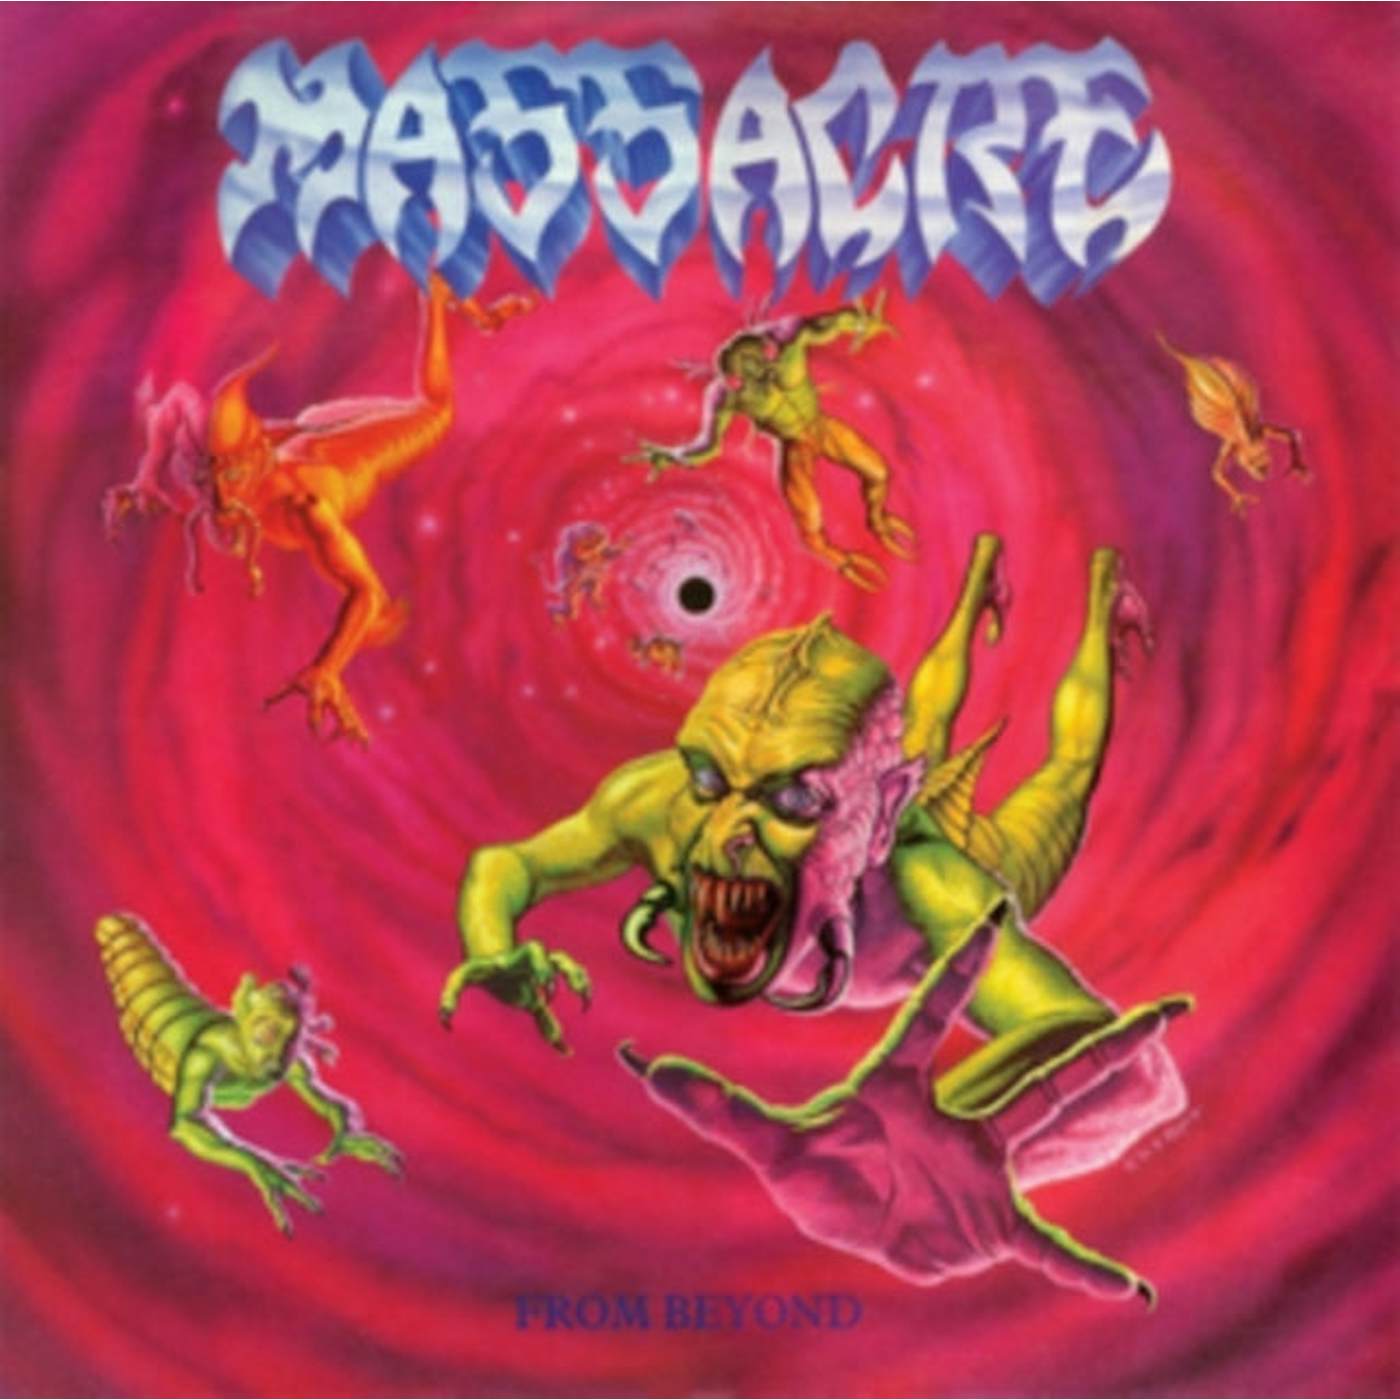 Massacre LP - From Beyond (Vinyl)